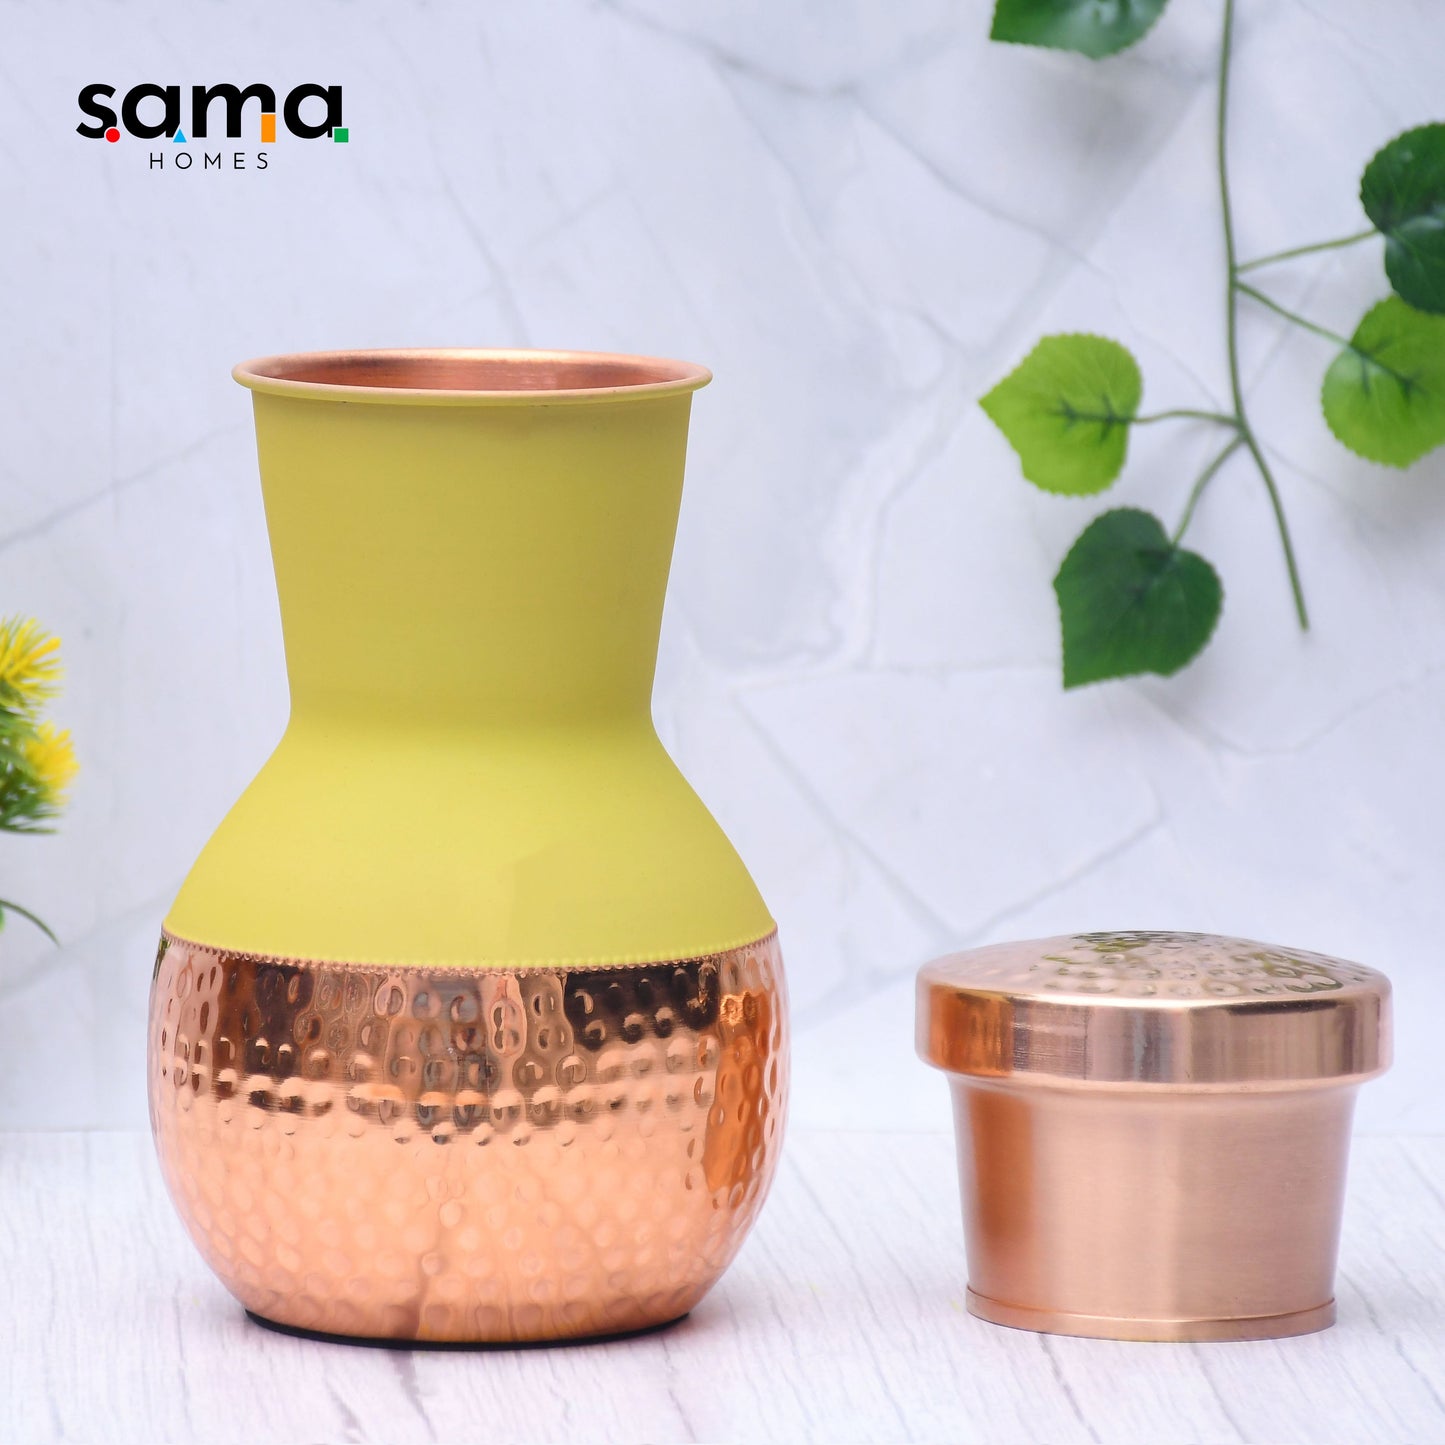 SAMA Homes - pure copper silk yellow matka pot with inbuilt glass capacity 1200ml